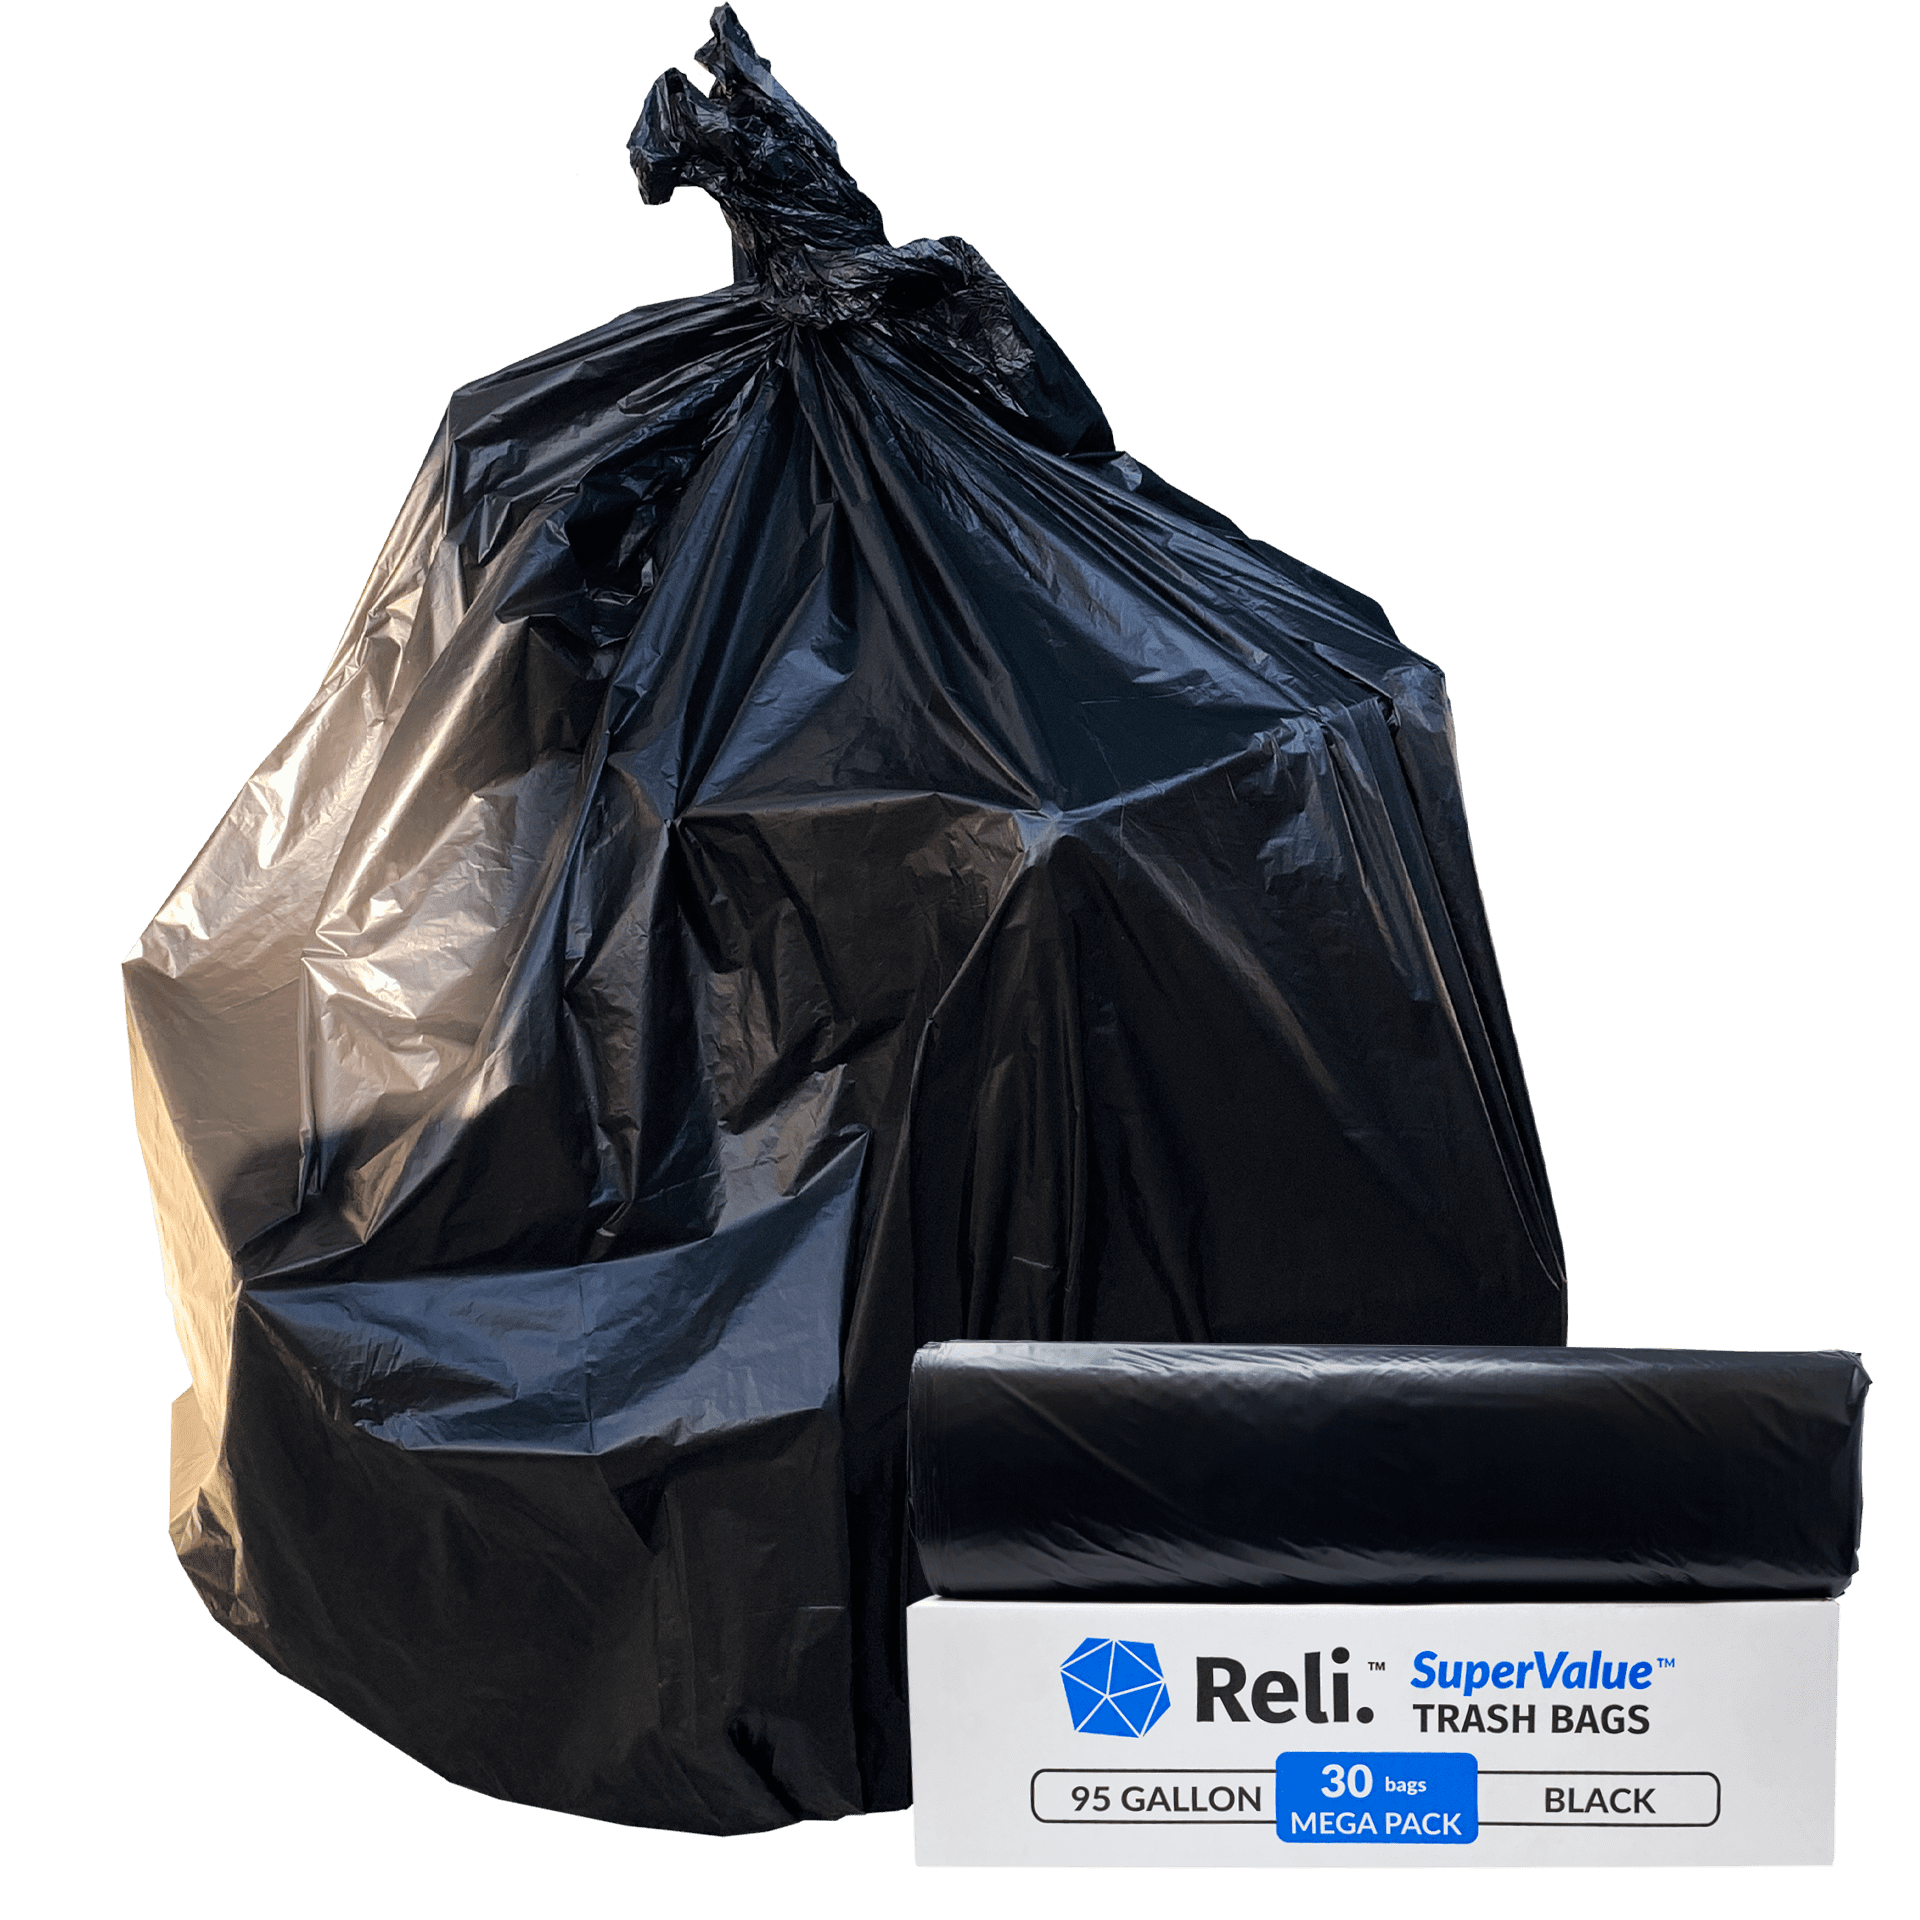 Heavy Duty Trash Compactor Bags 40 Pack with Ties Ultrasac 18 Gallon Nib